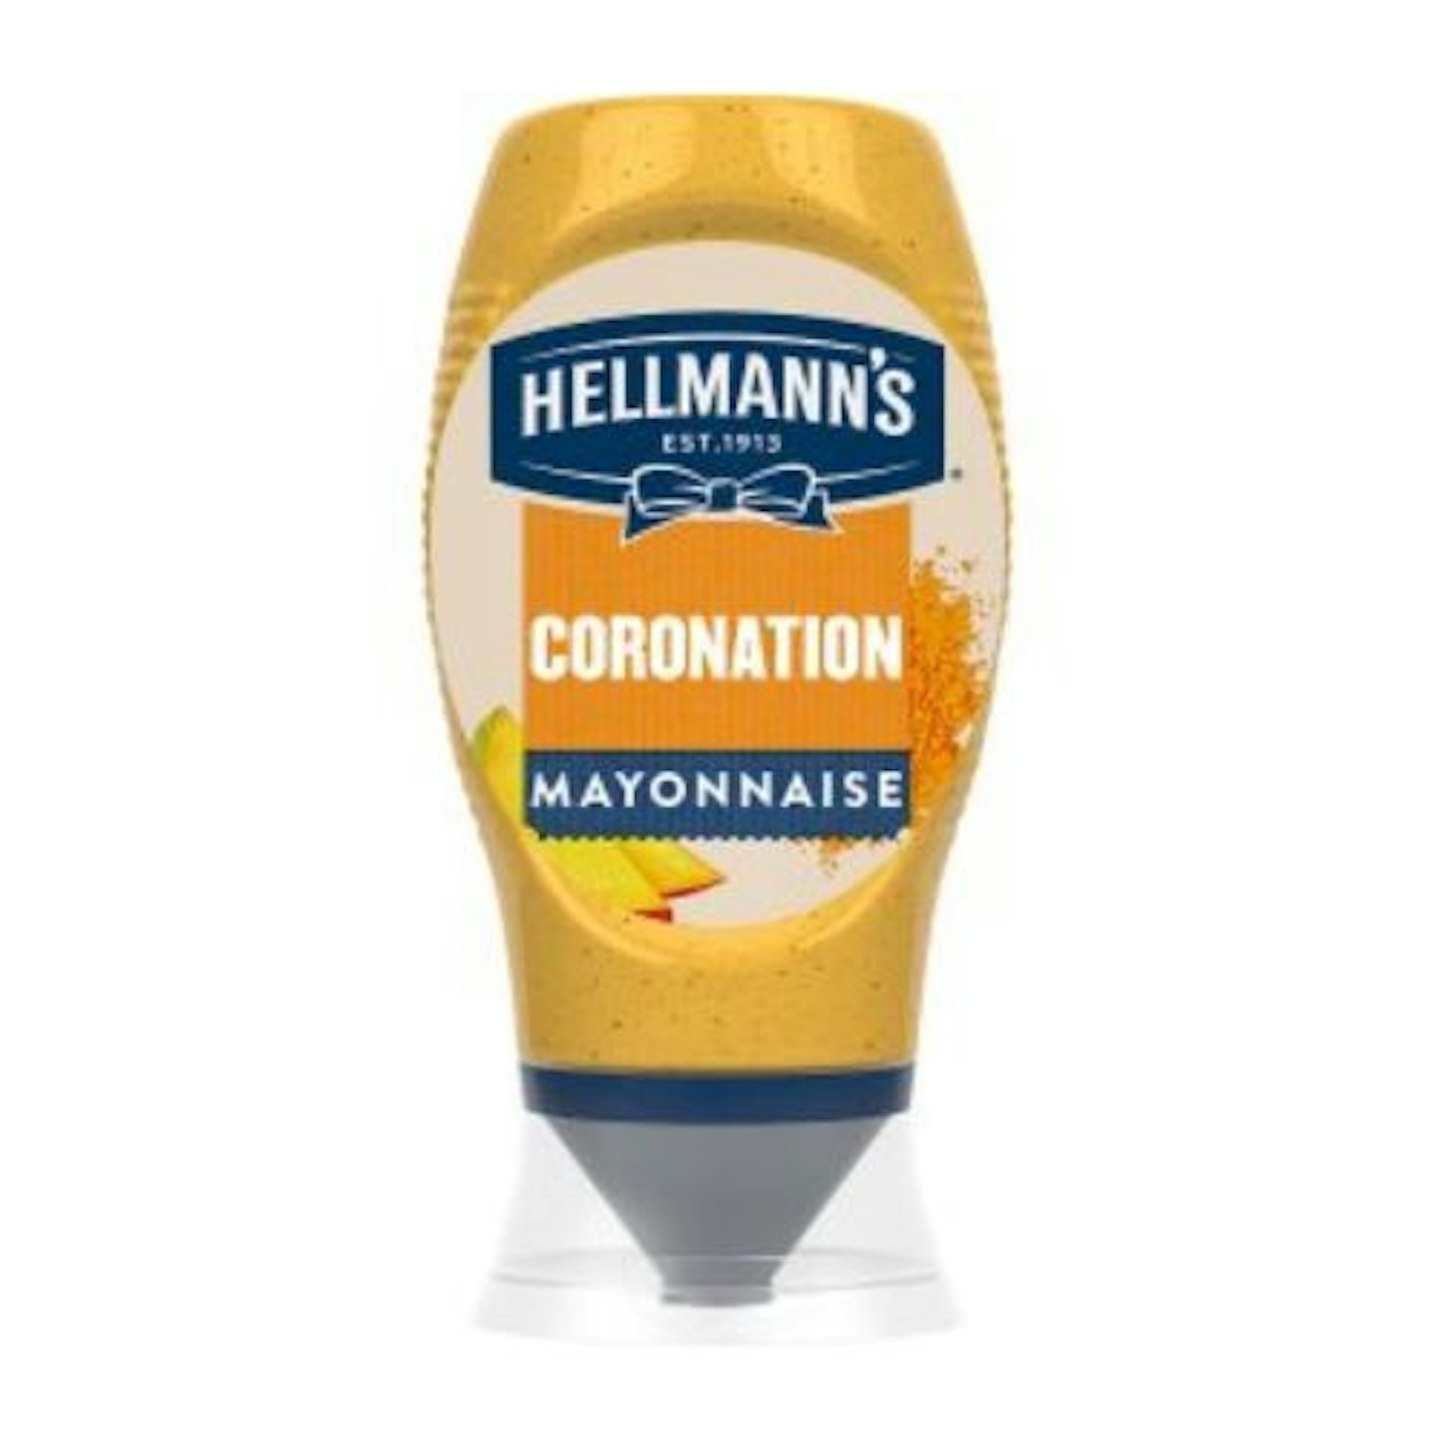 Hellmanns Coronation Mayonnaise